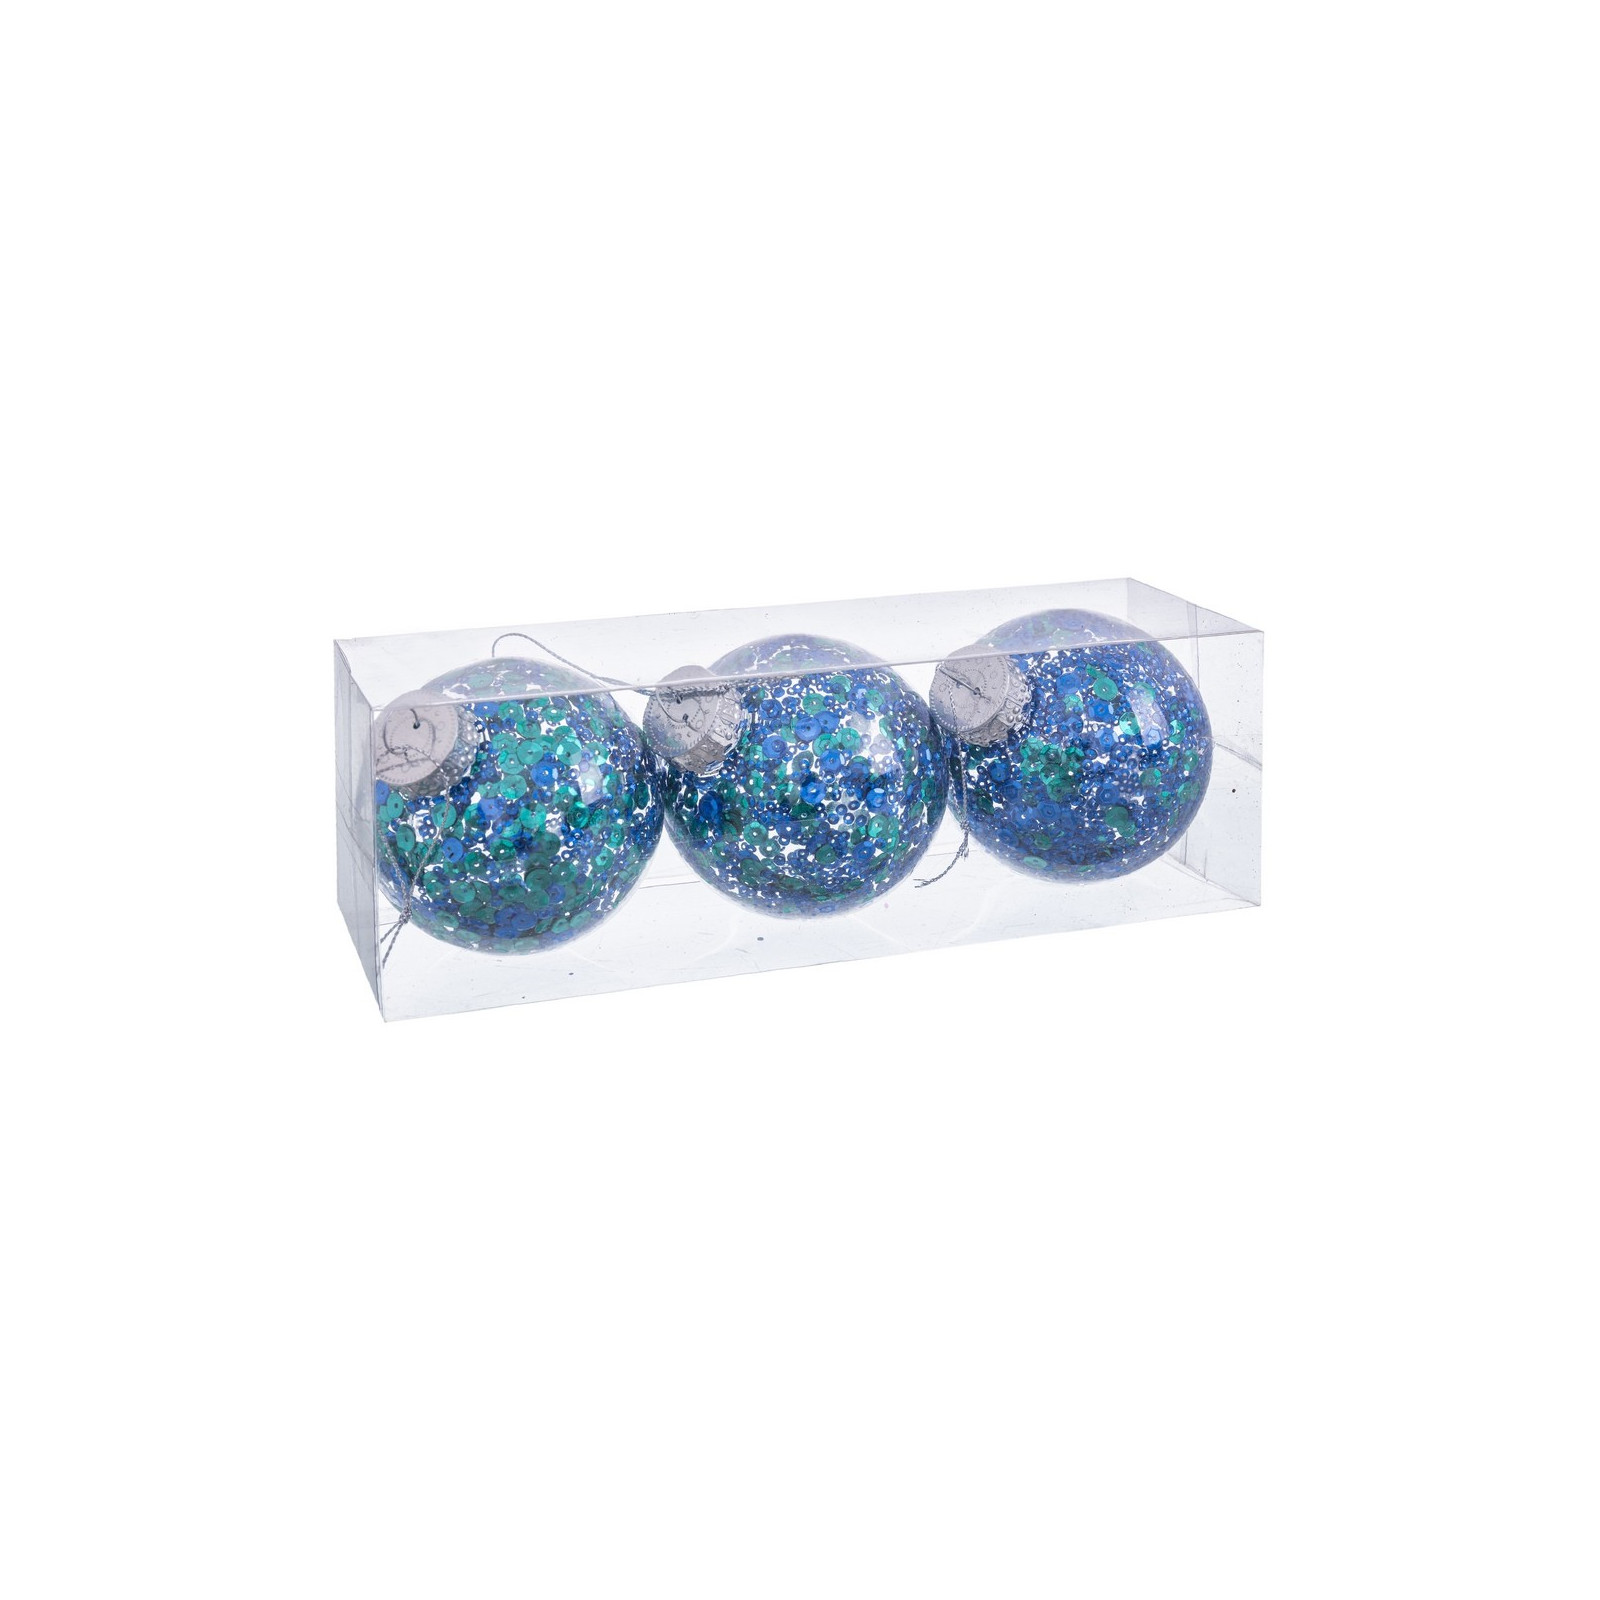 S 3 boules bleu vert transparentes 8 x 8 x 8 cm